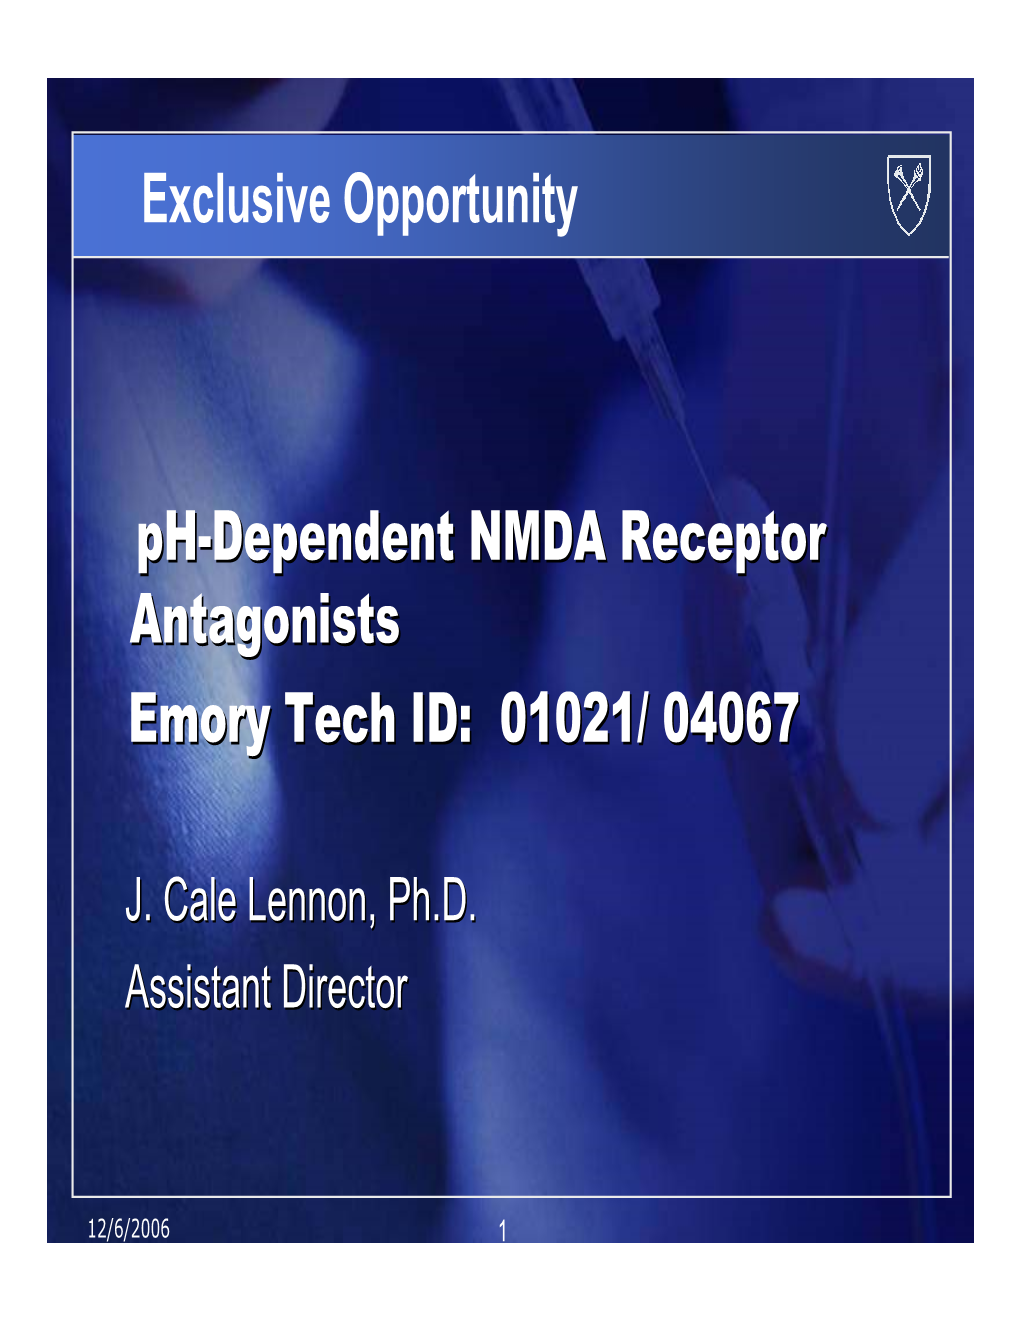 Ph-Dependent NMDA Receptor Antagonists Emory Tech ID: 01021